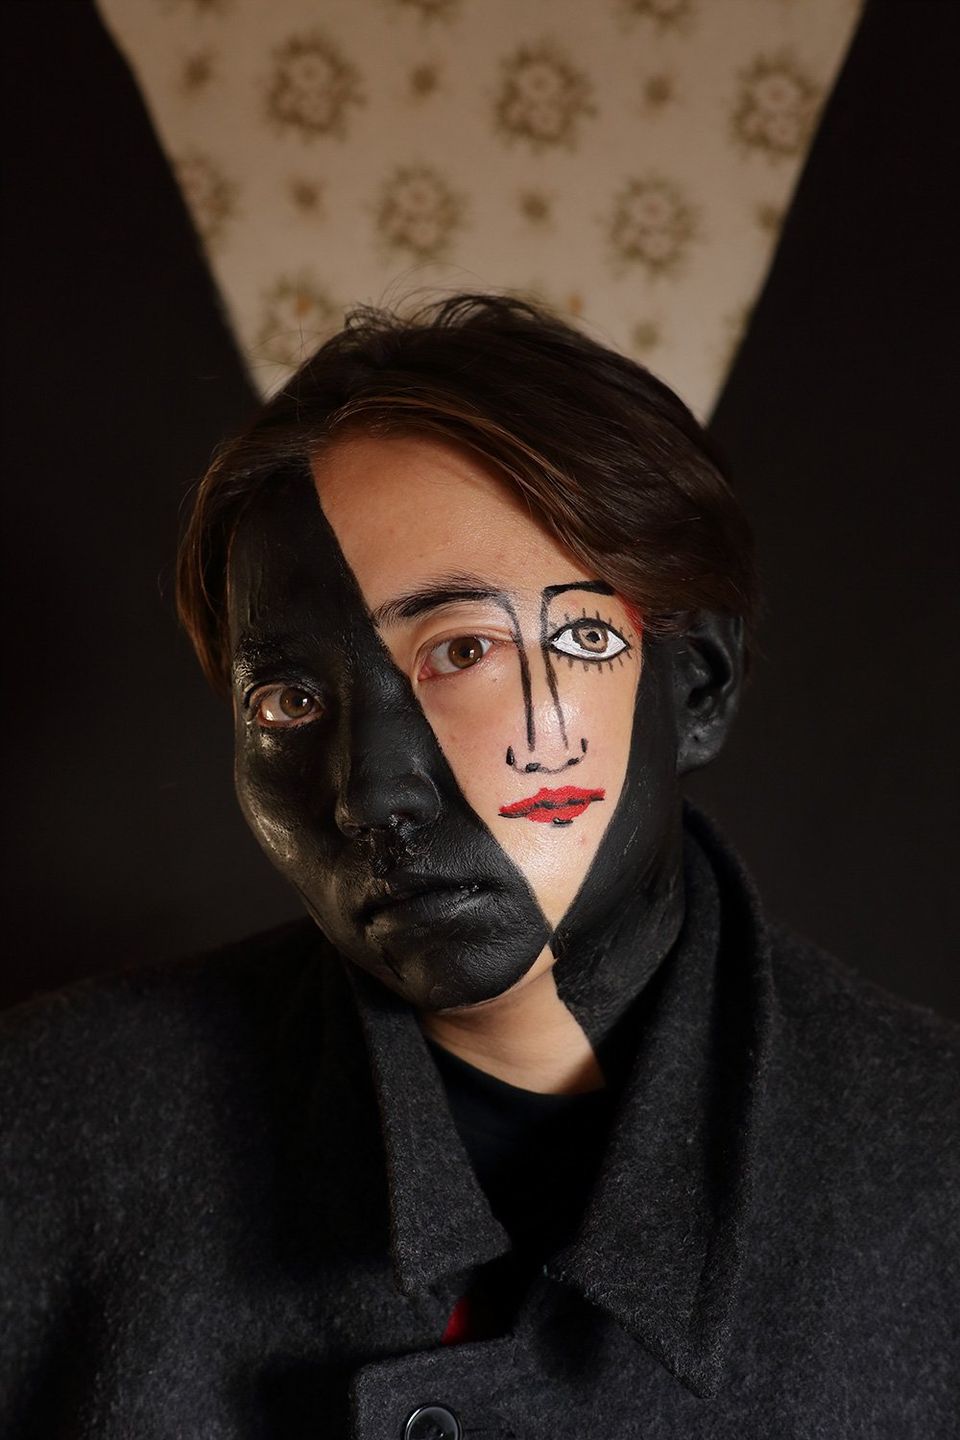 „Deltaface No. 4“ by Sebastian Bieniek (B1EN1EK), 2019, Berlin (Germany). Model: Zoljargal Enkh-Amgalan. Oeuvre of Bieniek-Face. Edition of 9 original photographs. 100 cm. x 67 cm. From the „Deltaface“ series. Oeuvre of Bieniek-Face.